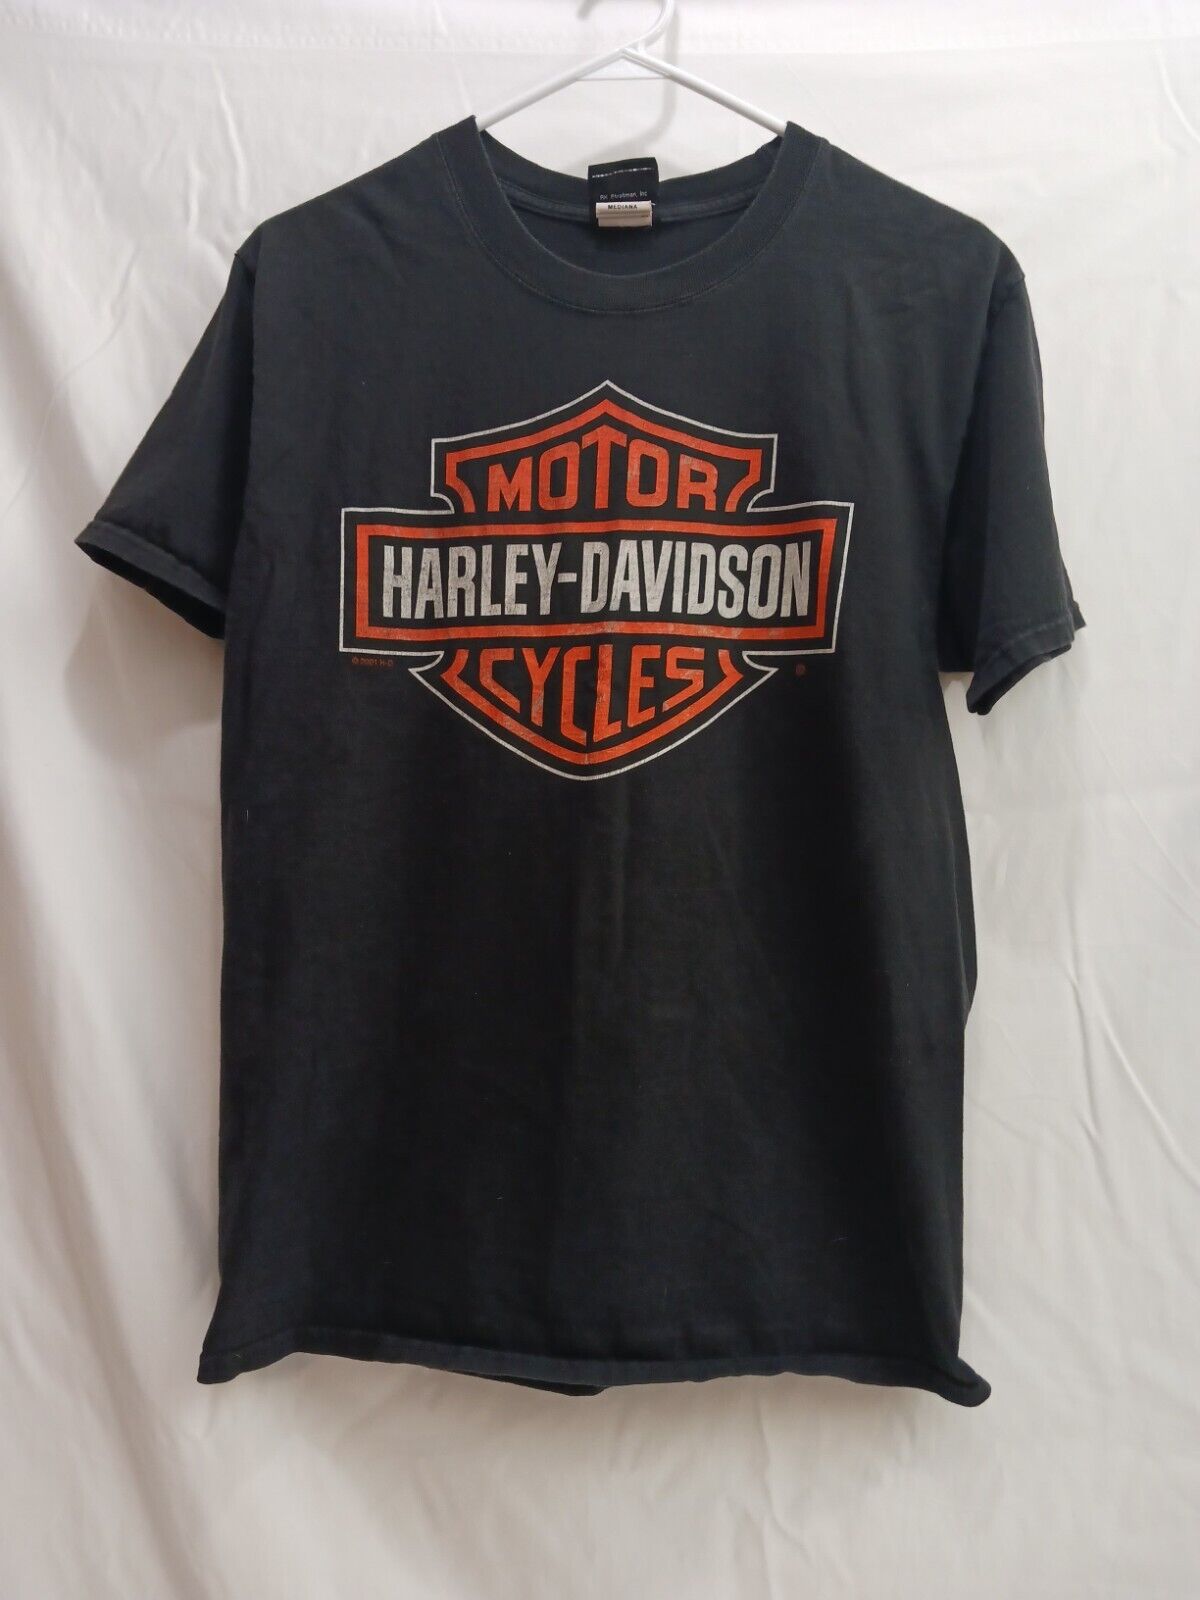 Vintage 2001 Harley Davidson Tshirt Size Medium